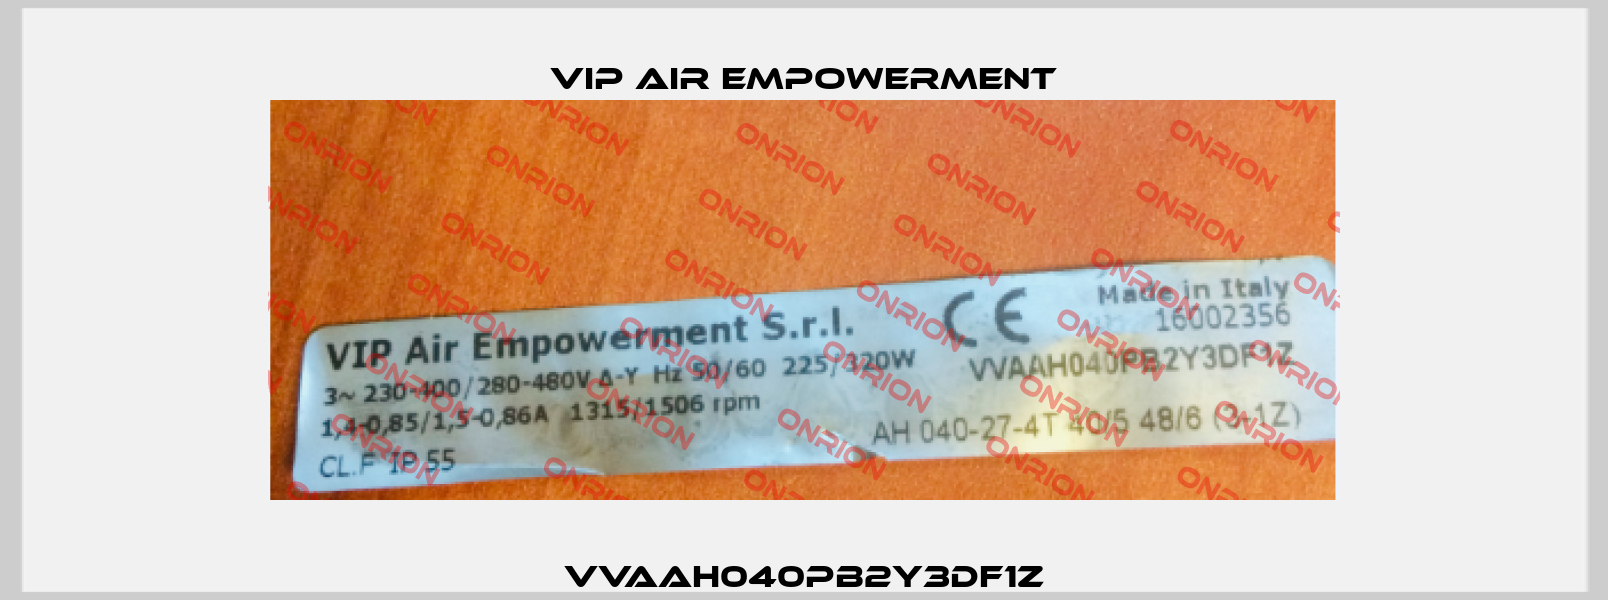 VVAAH040PB2Y3DF1Z VIP AIR EMPOWERMENT